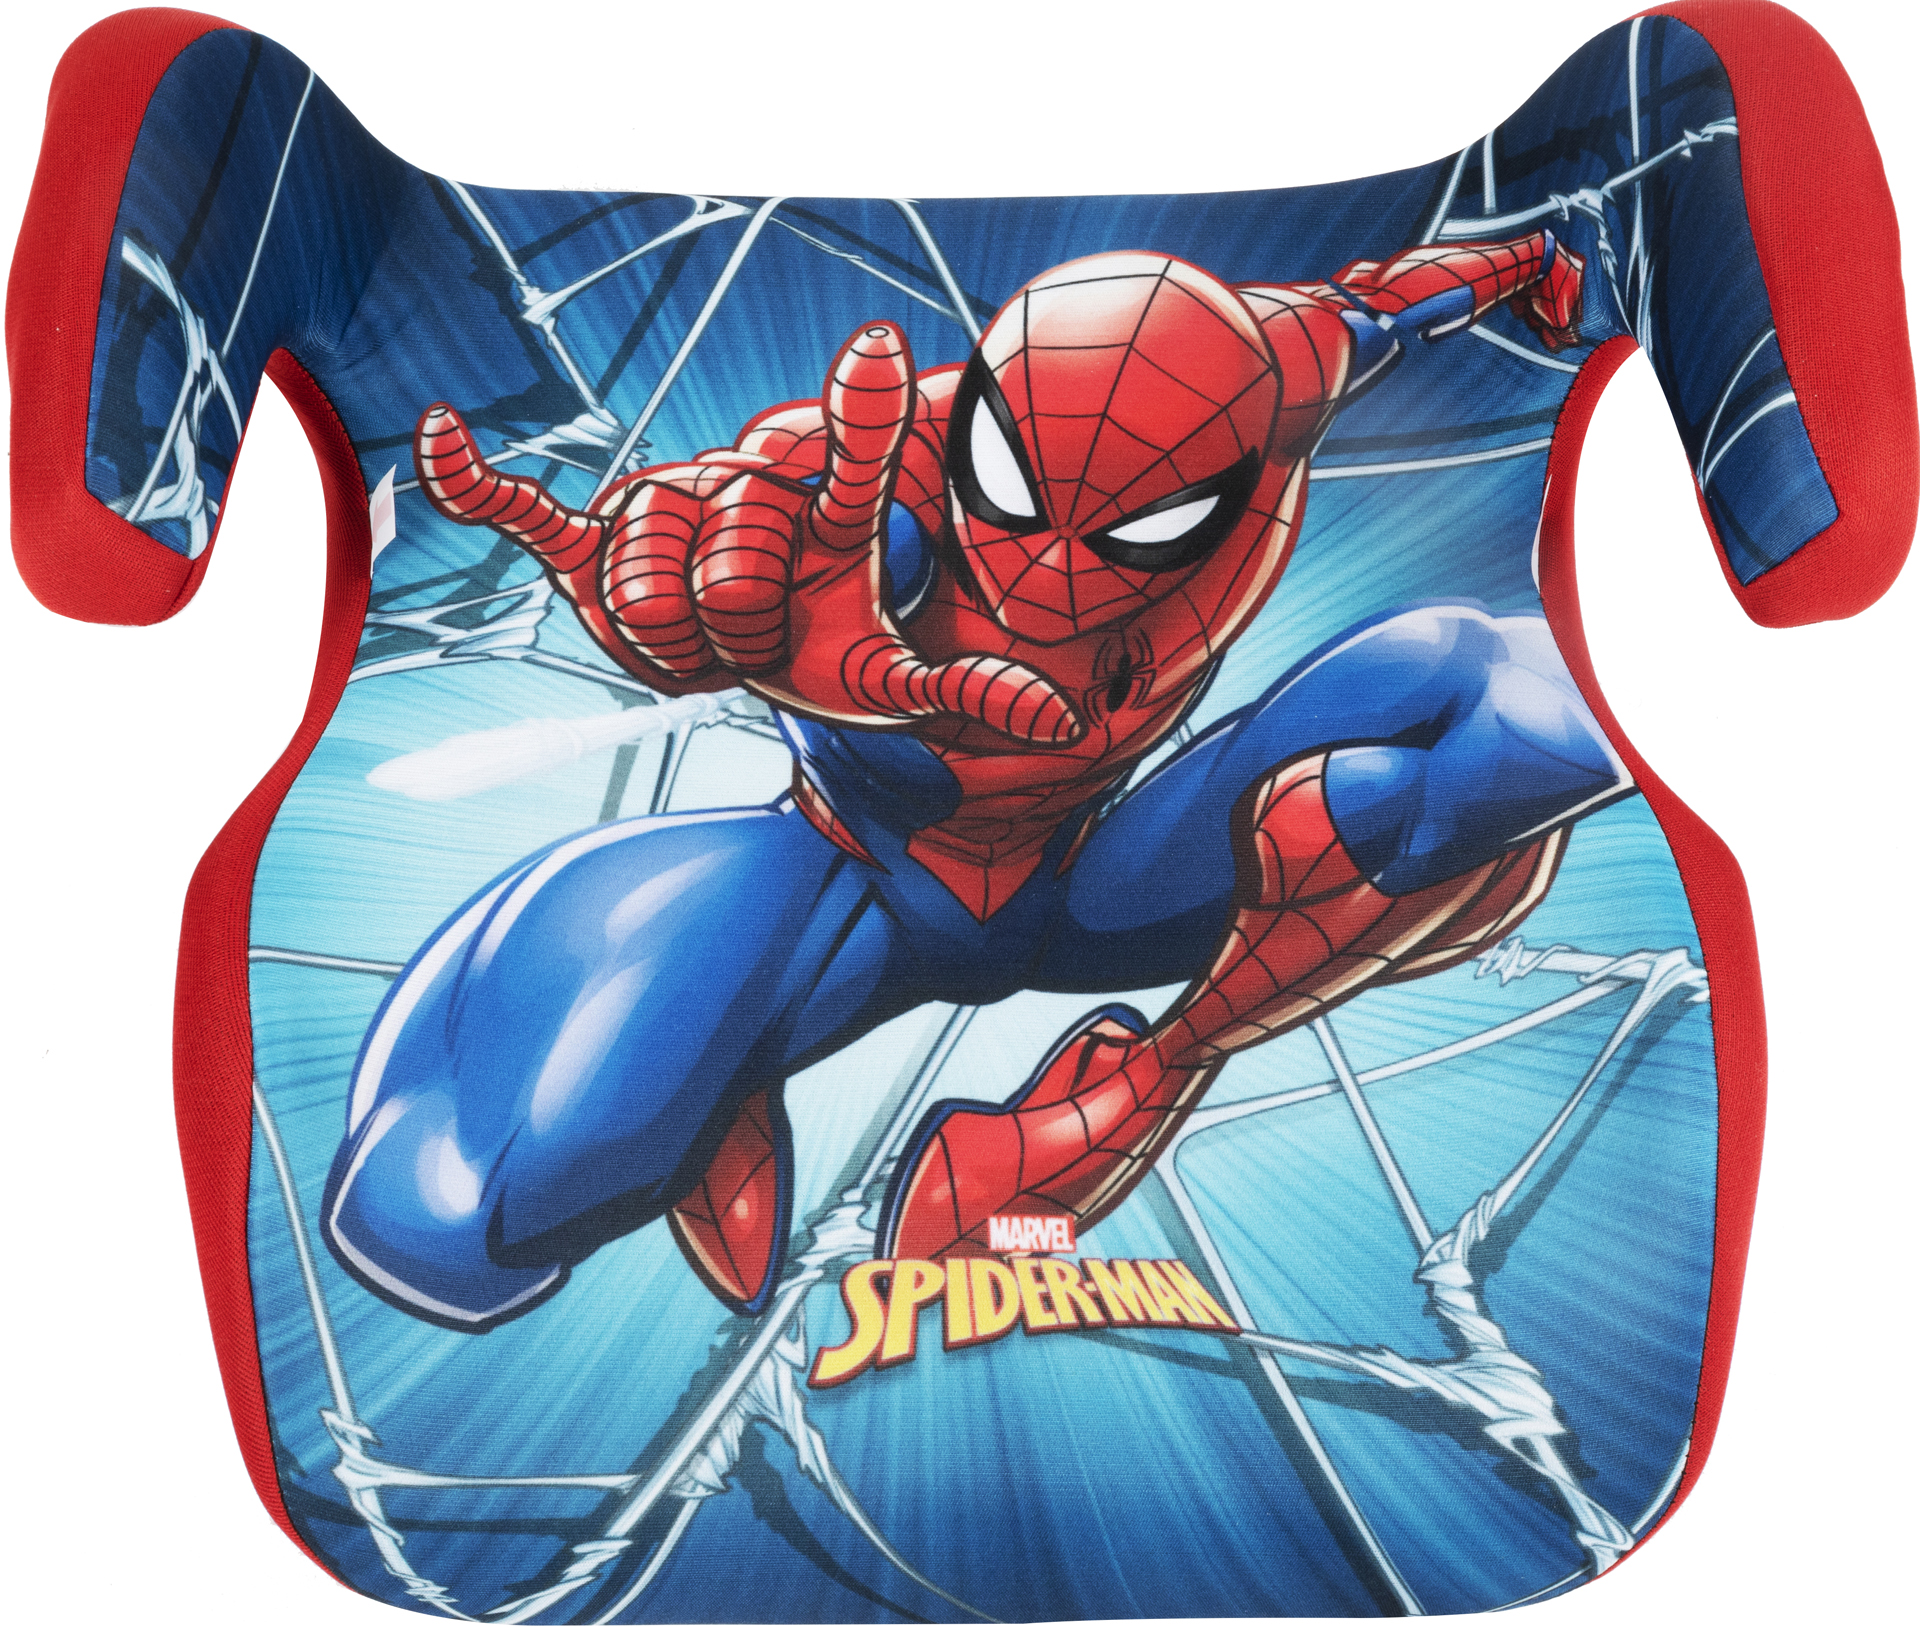 Marvel Zitverhoger Spiderman Groep 2/3 (9285006)